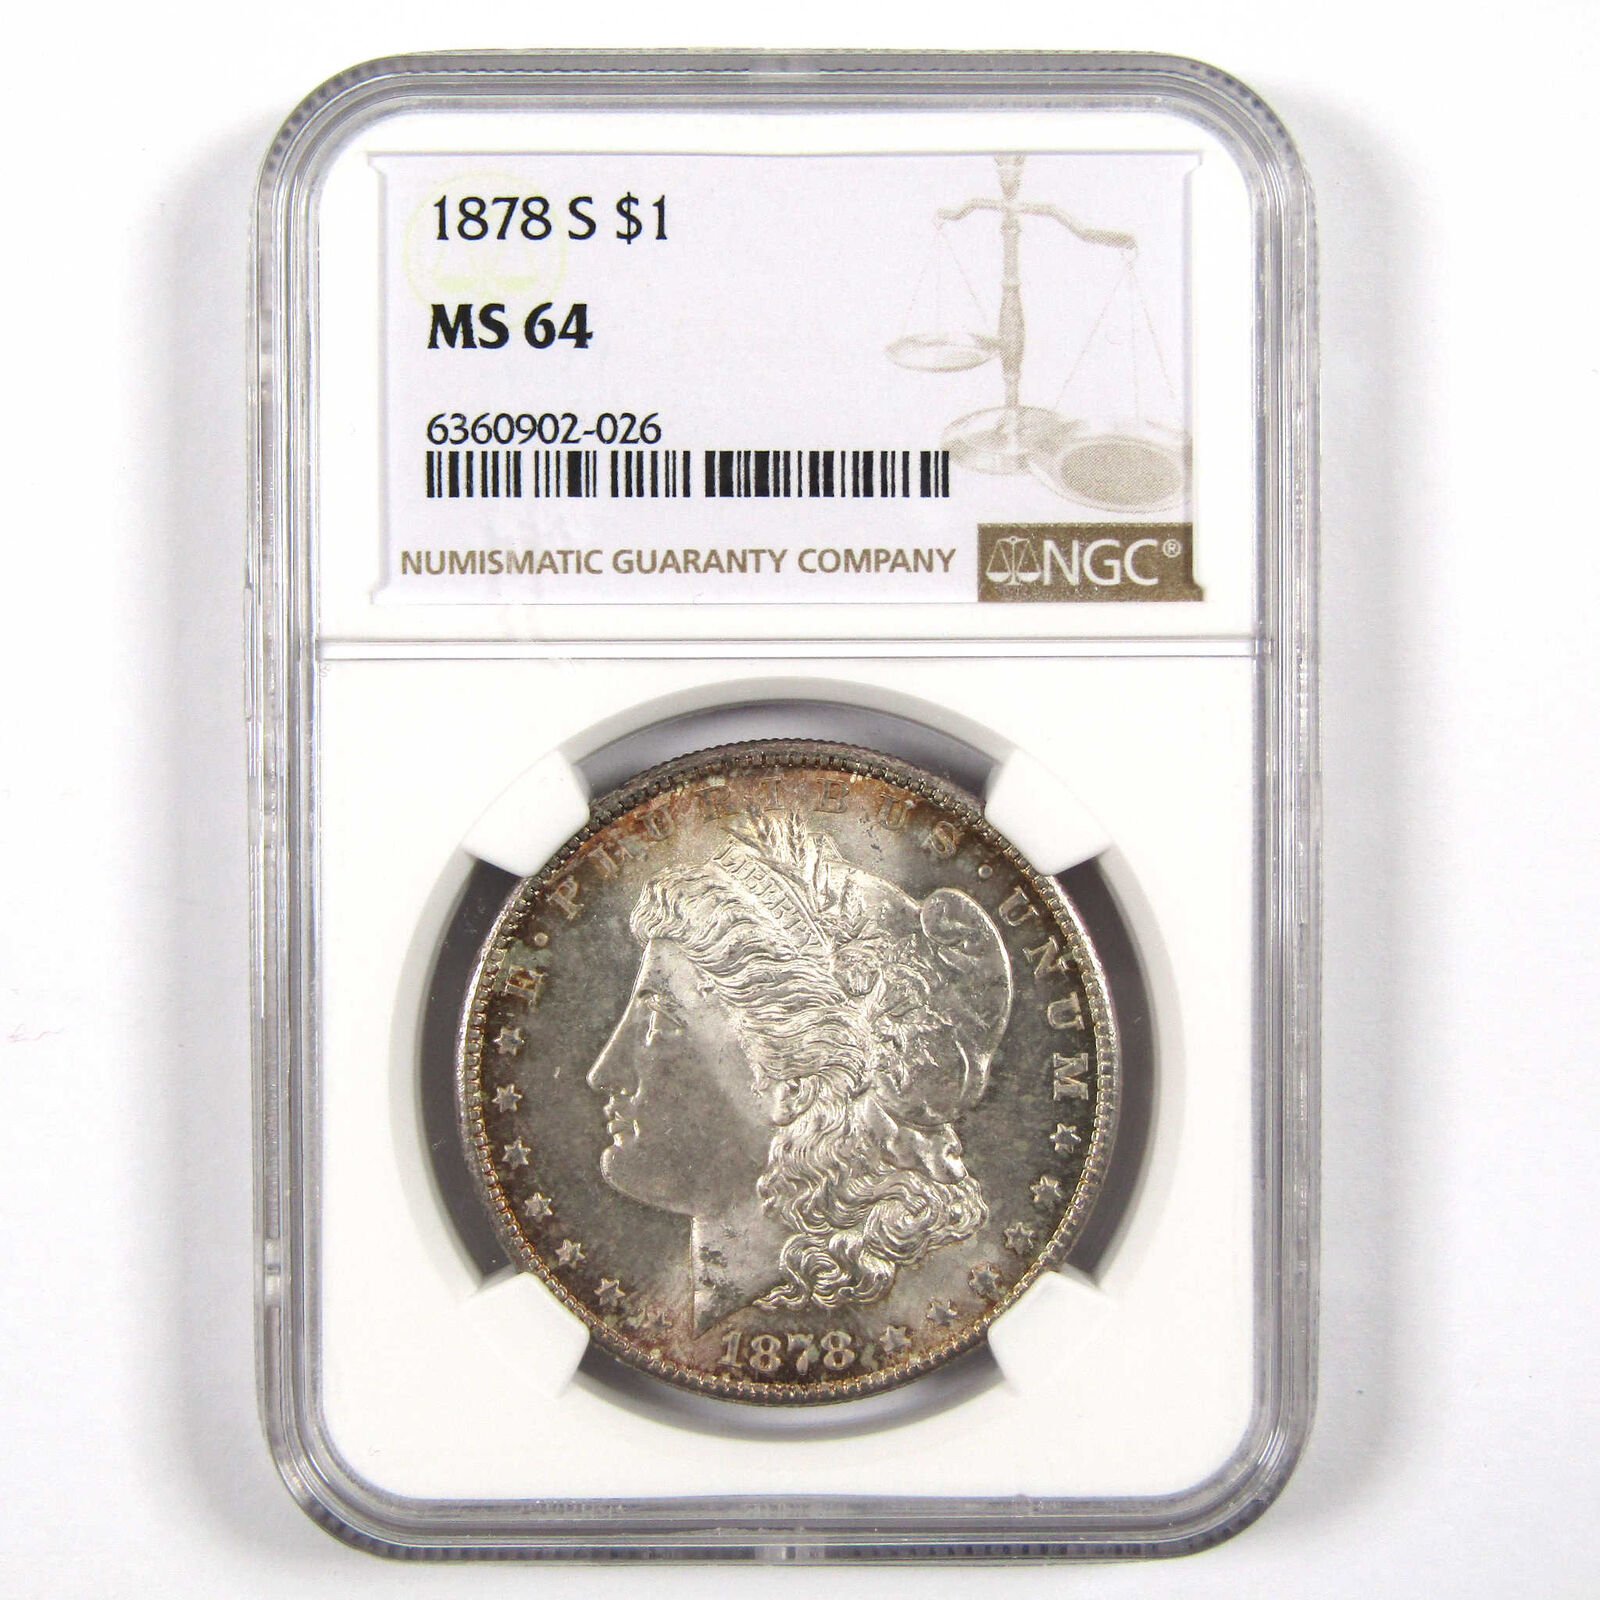 1878 S Morgan Dollar MS 64 NGC 90% Silver $1 Uncirculated SKU:I7738